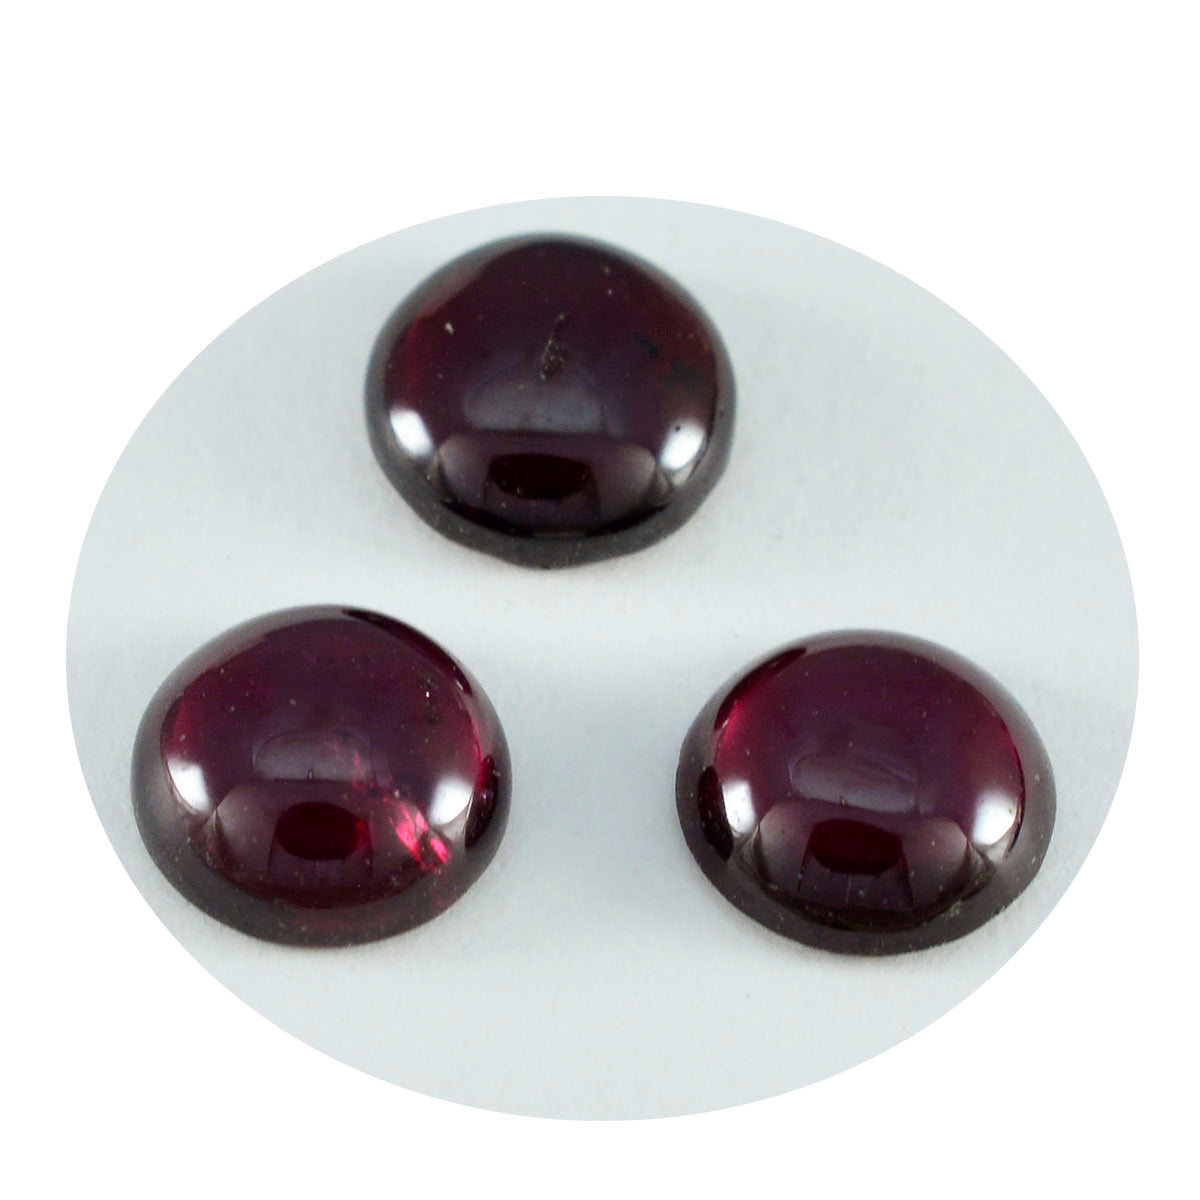 Riyogems 1 Stück roter Granat-Cabochon, 14 x 14 mm, runde Form, attraktive Qualitätsedelsteine